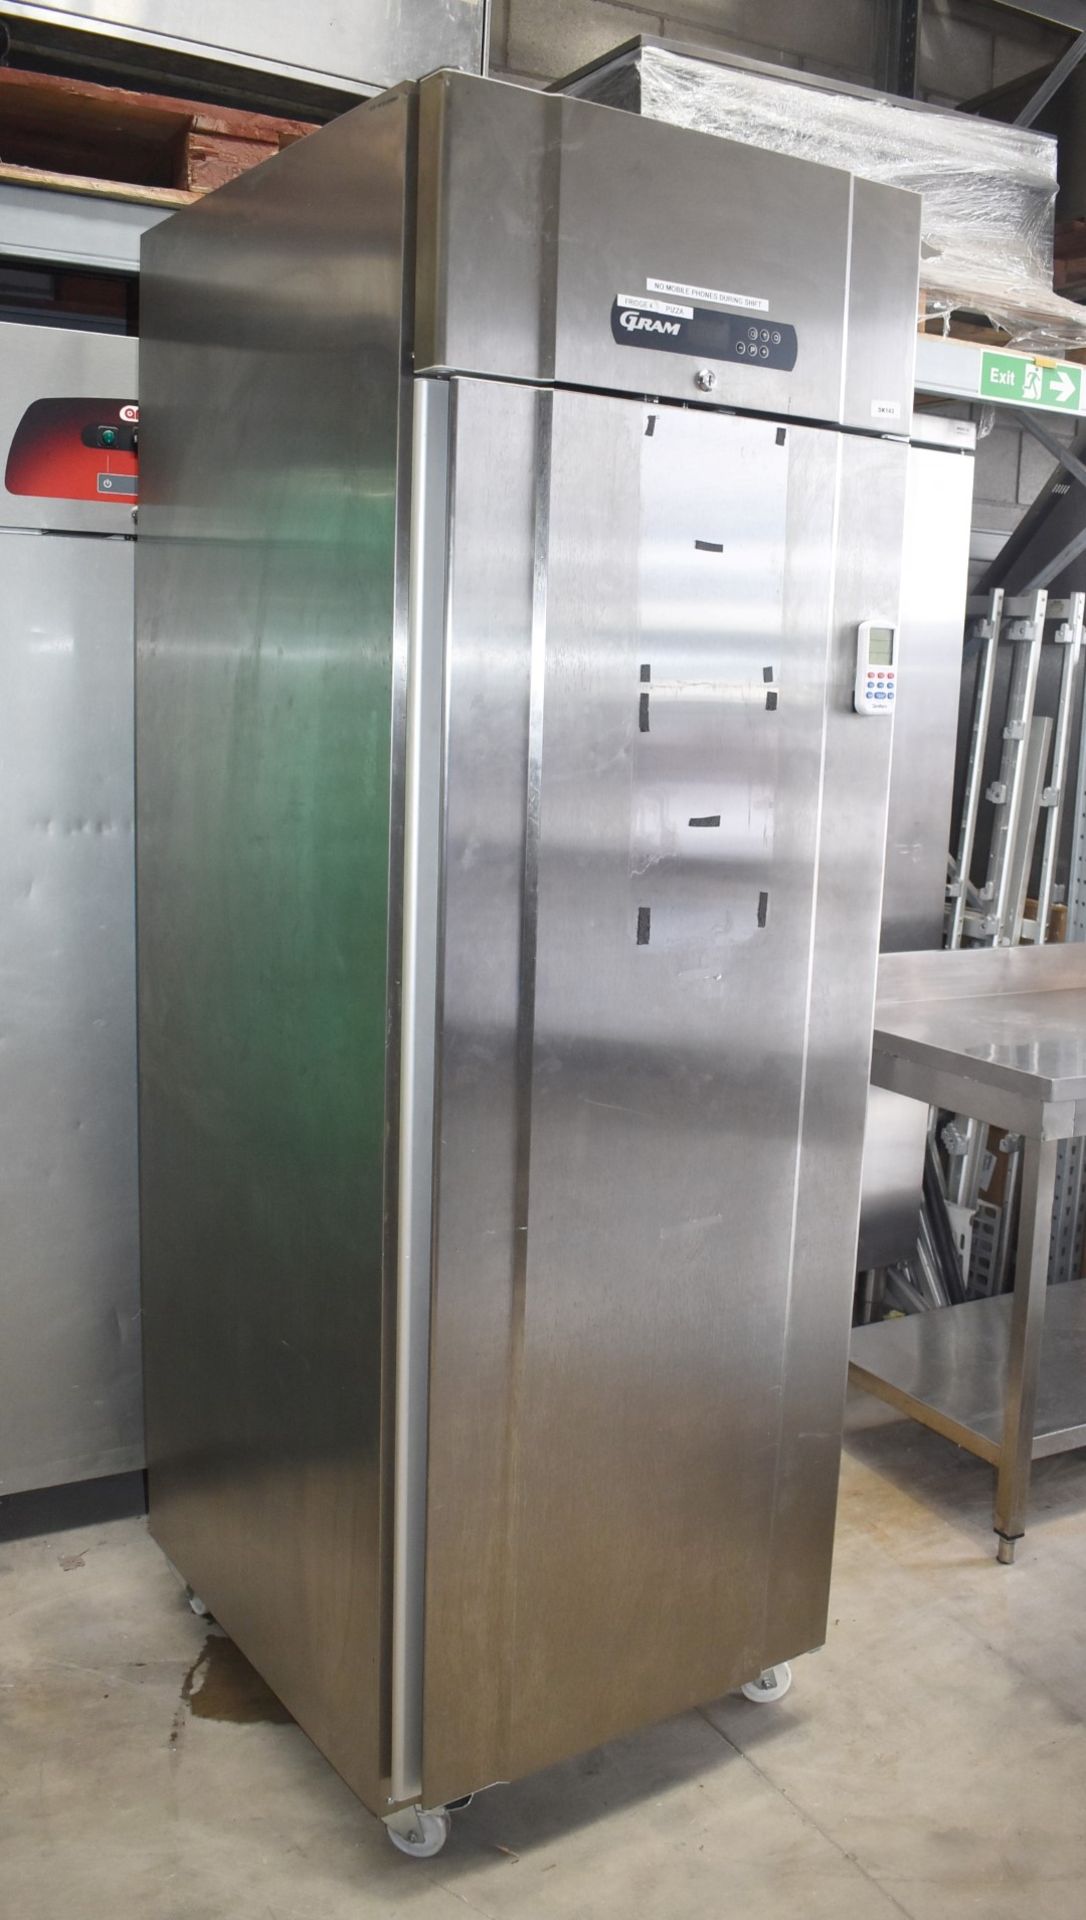 1 x Gram Upright Refrigerator - Model: PLUS K 69 FFG - Current 2021 Model - RRP £1,750 - Image 5 of 22